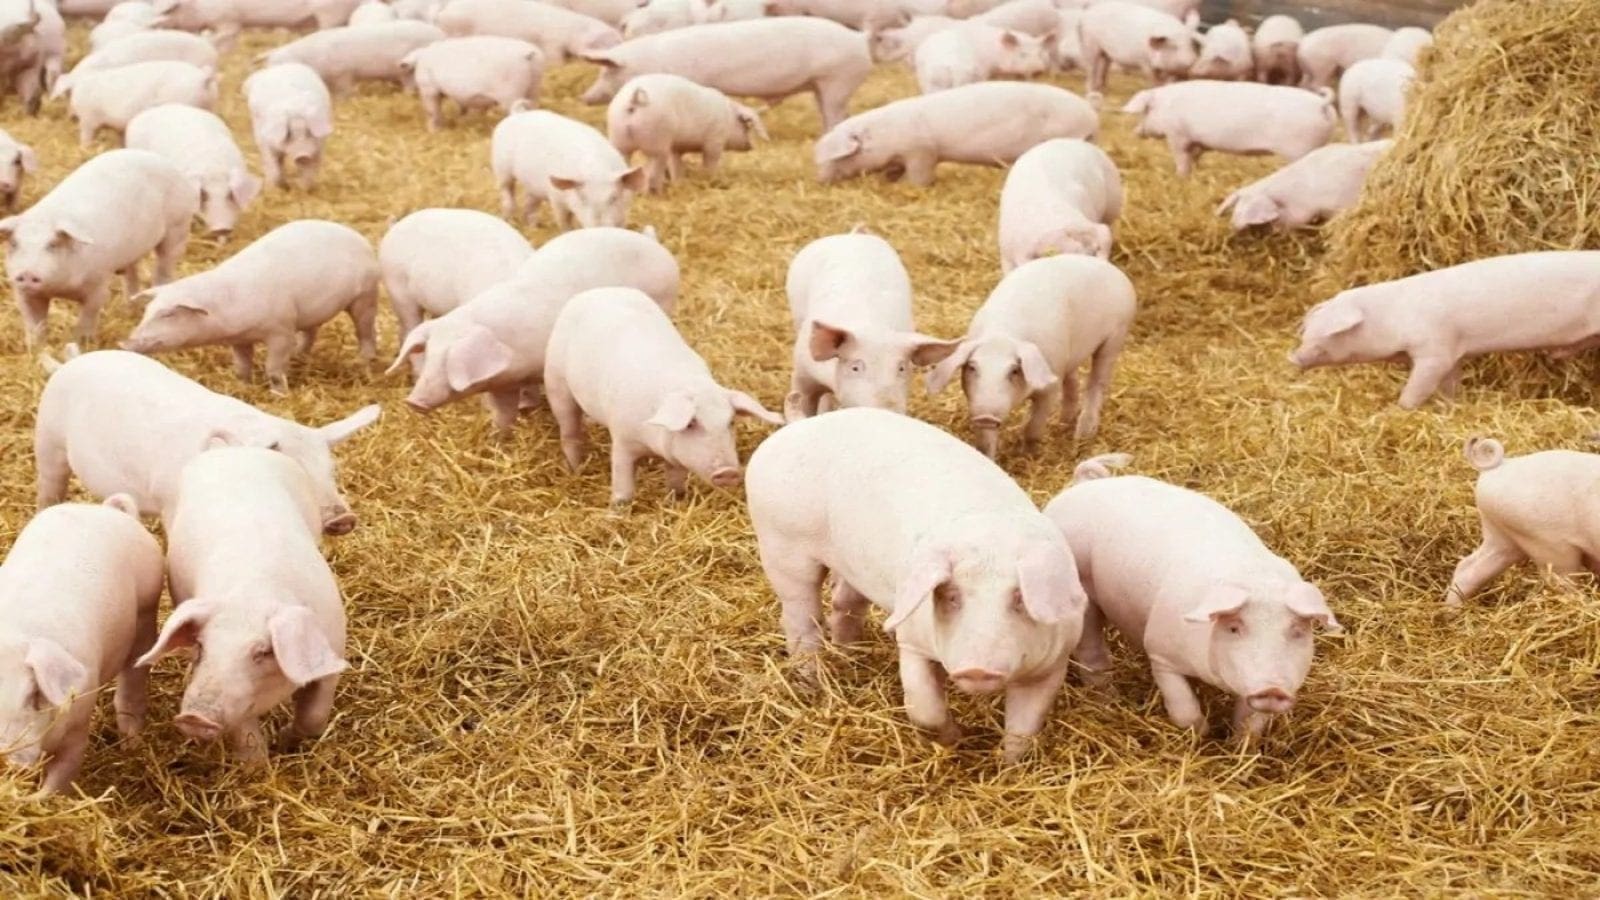 Smithfield Foods shuts down sow farms amid declining profits